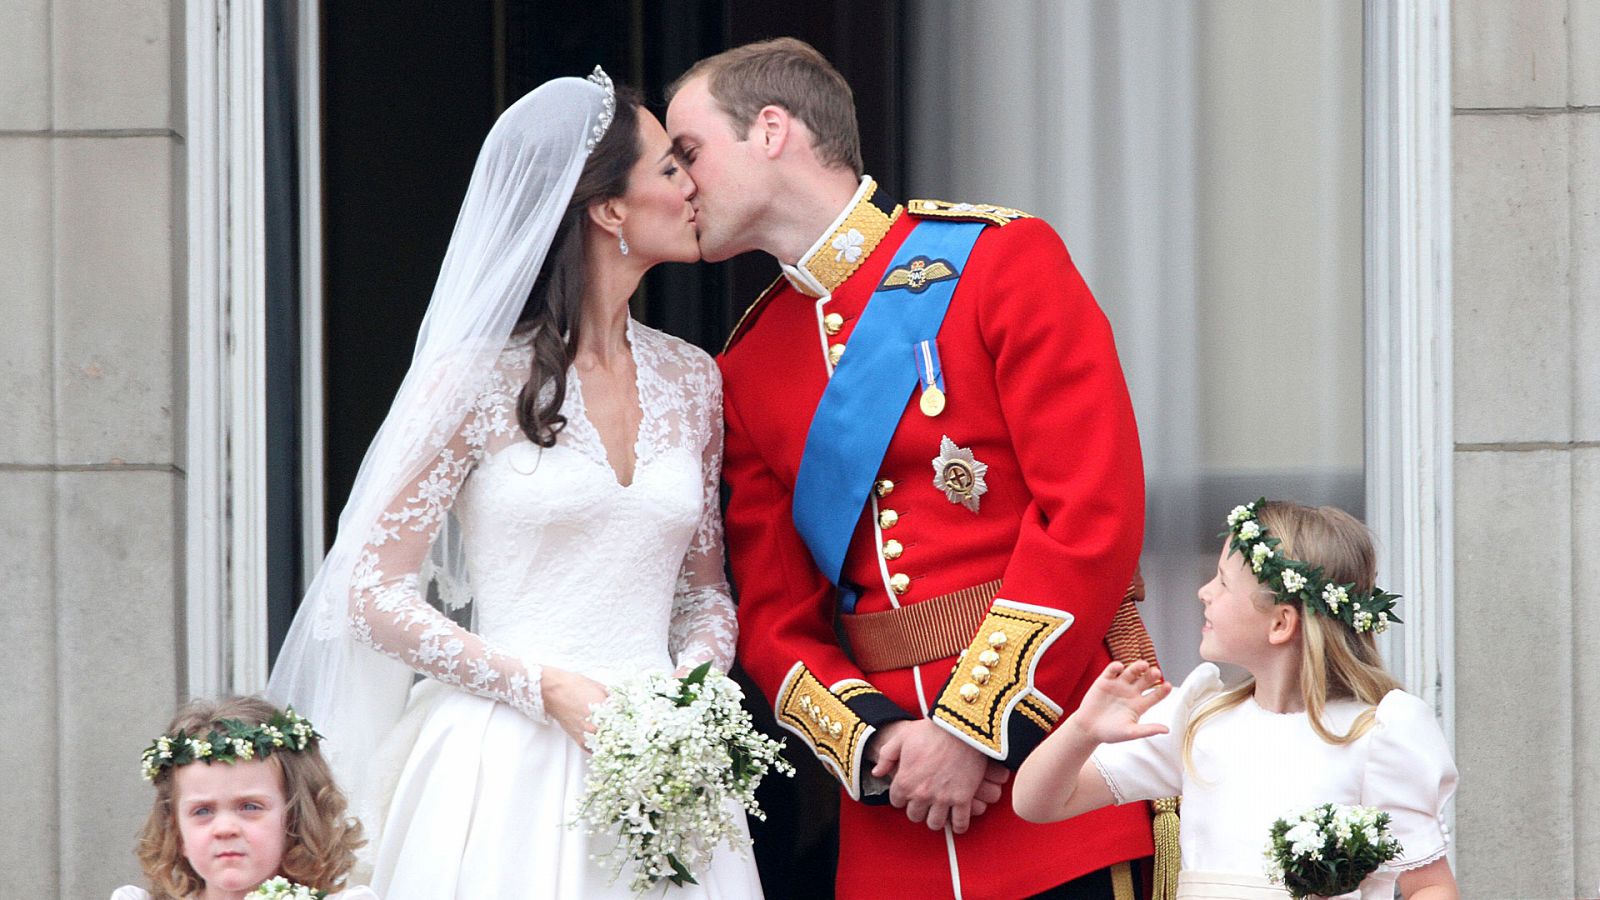 D Corazón: Especial por la boda de Guillermo de Inglaterra y Kate Middleton  | RTVE Play